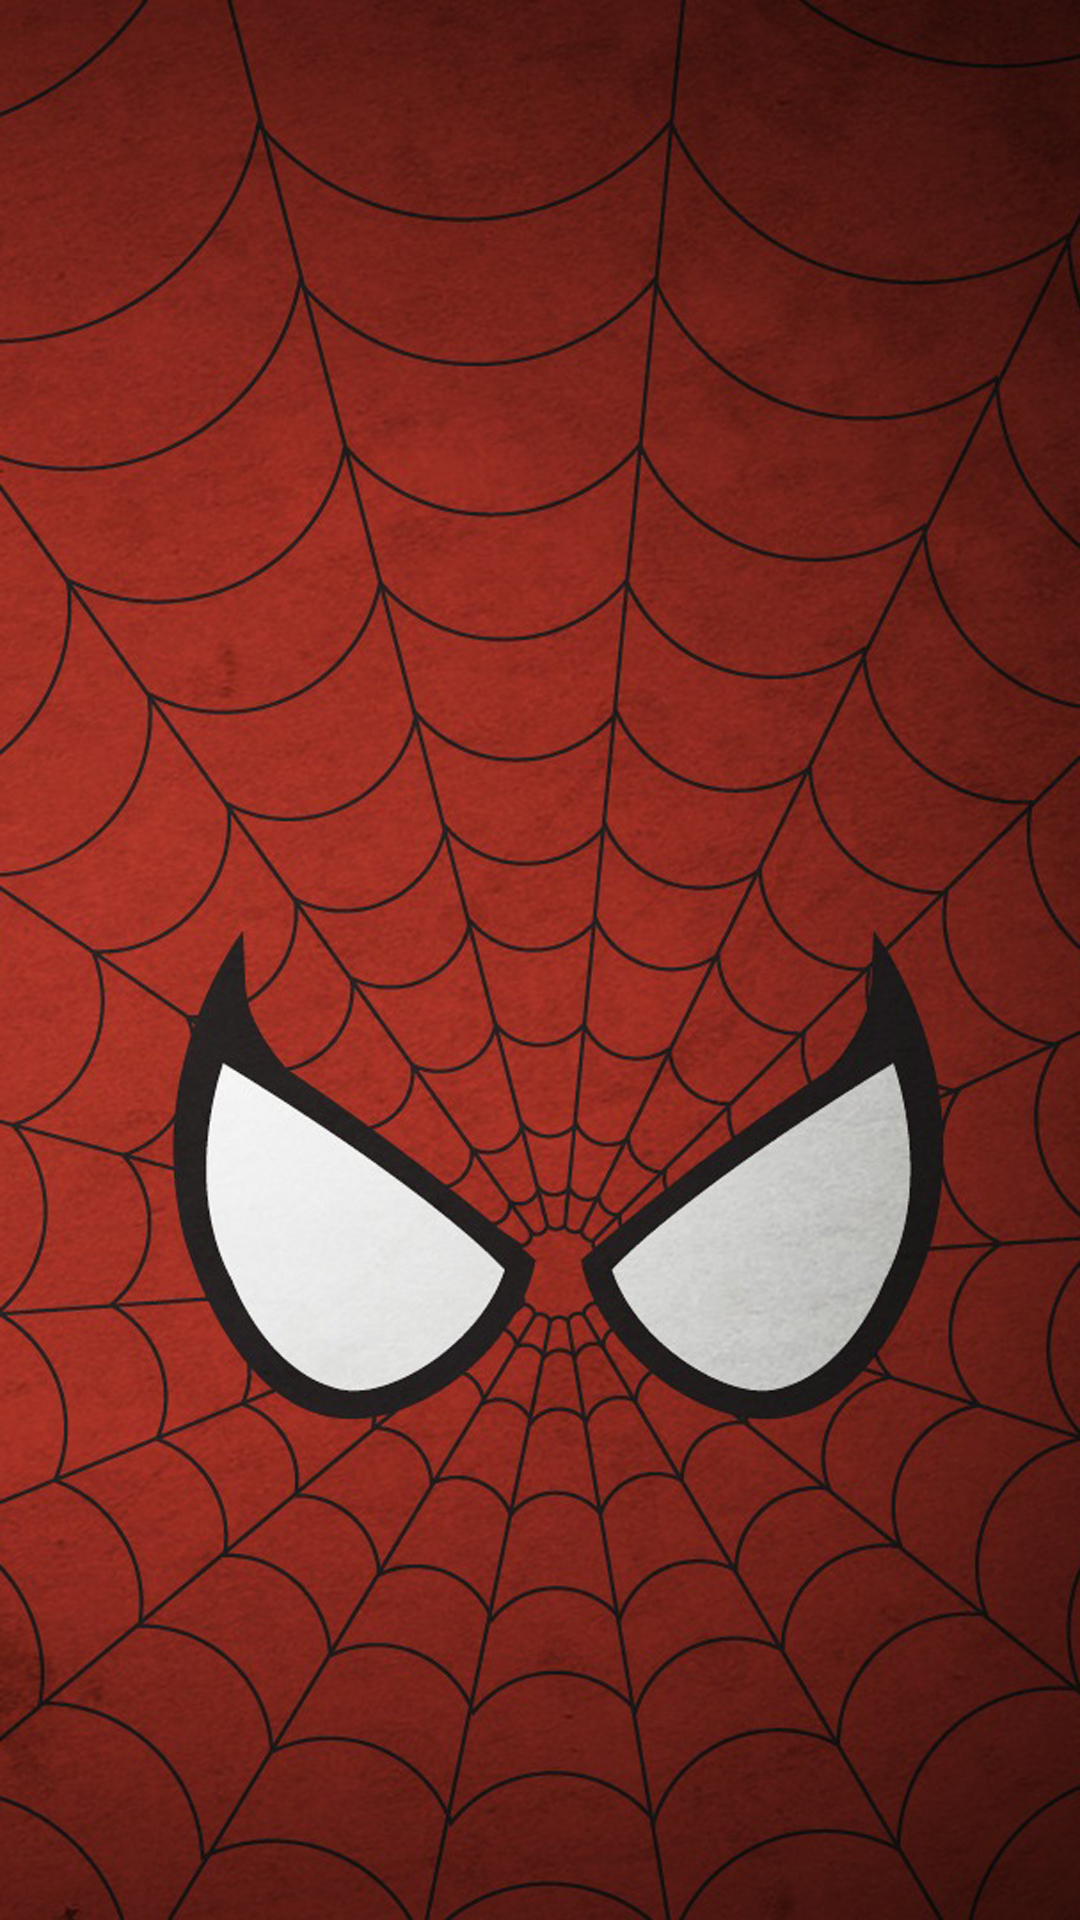 Spider man mobile wallpaper